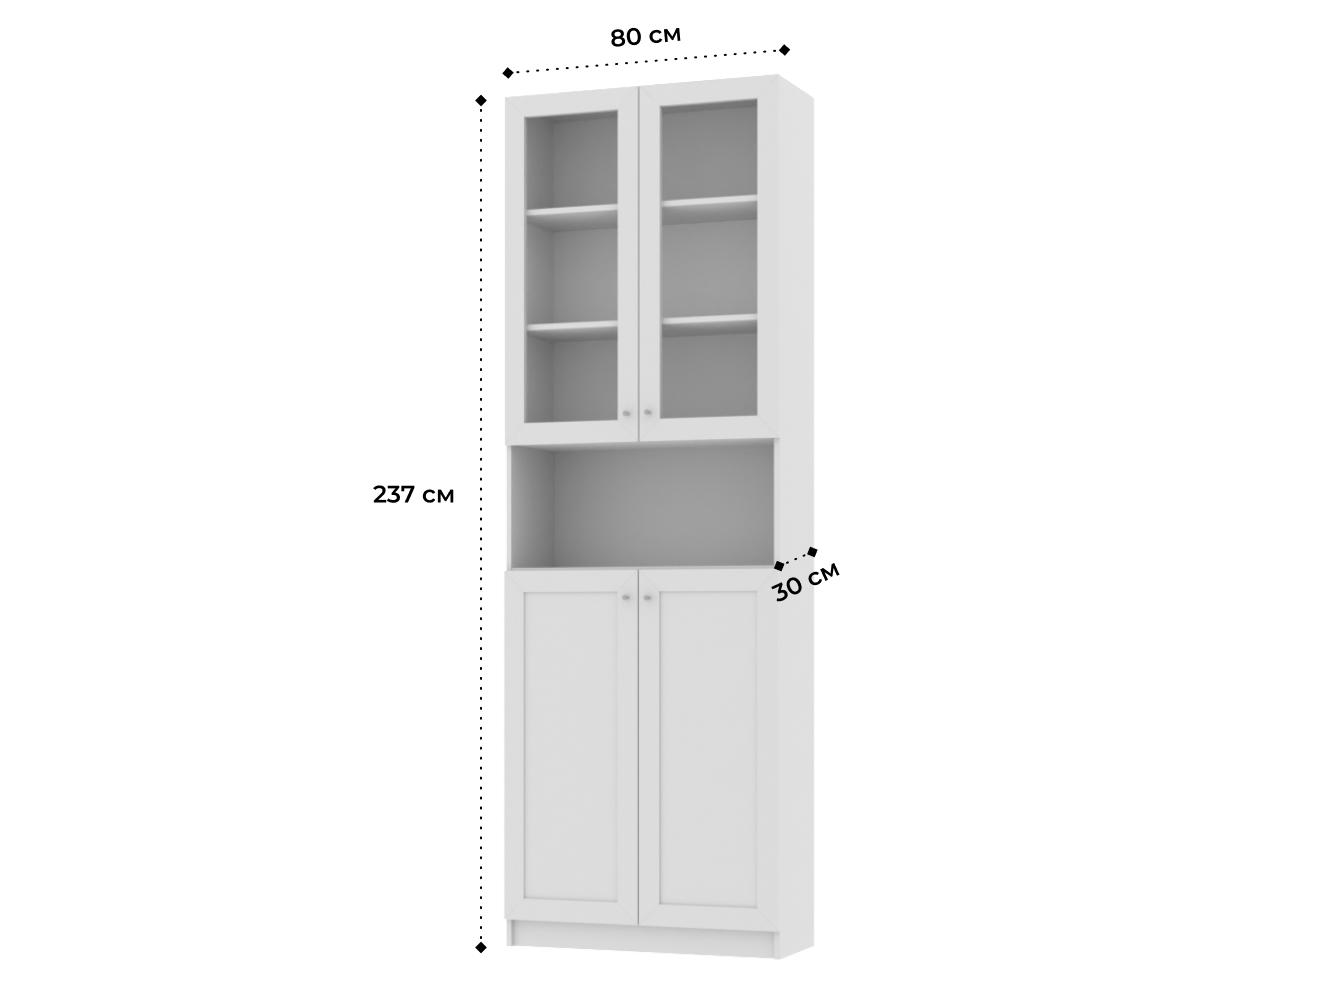  Книжный шкаф Билли 17 white ИКЕА (IKEA) изображение товара